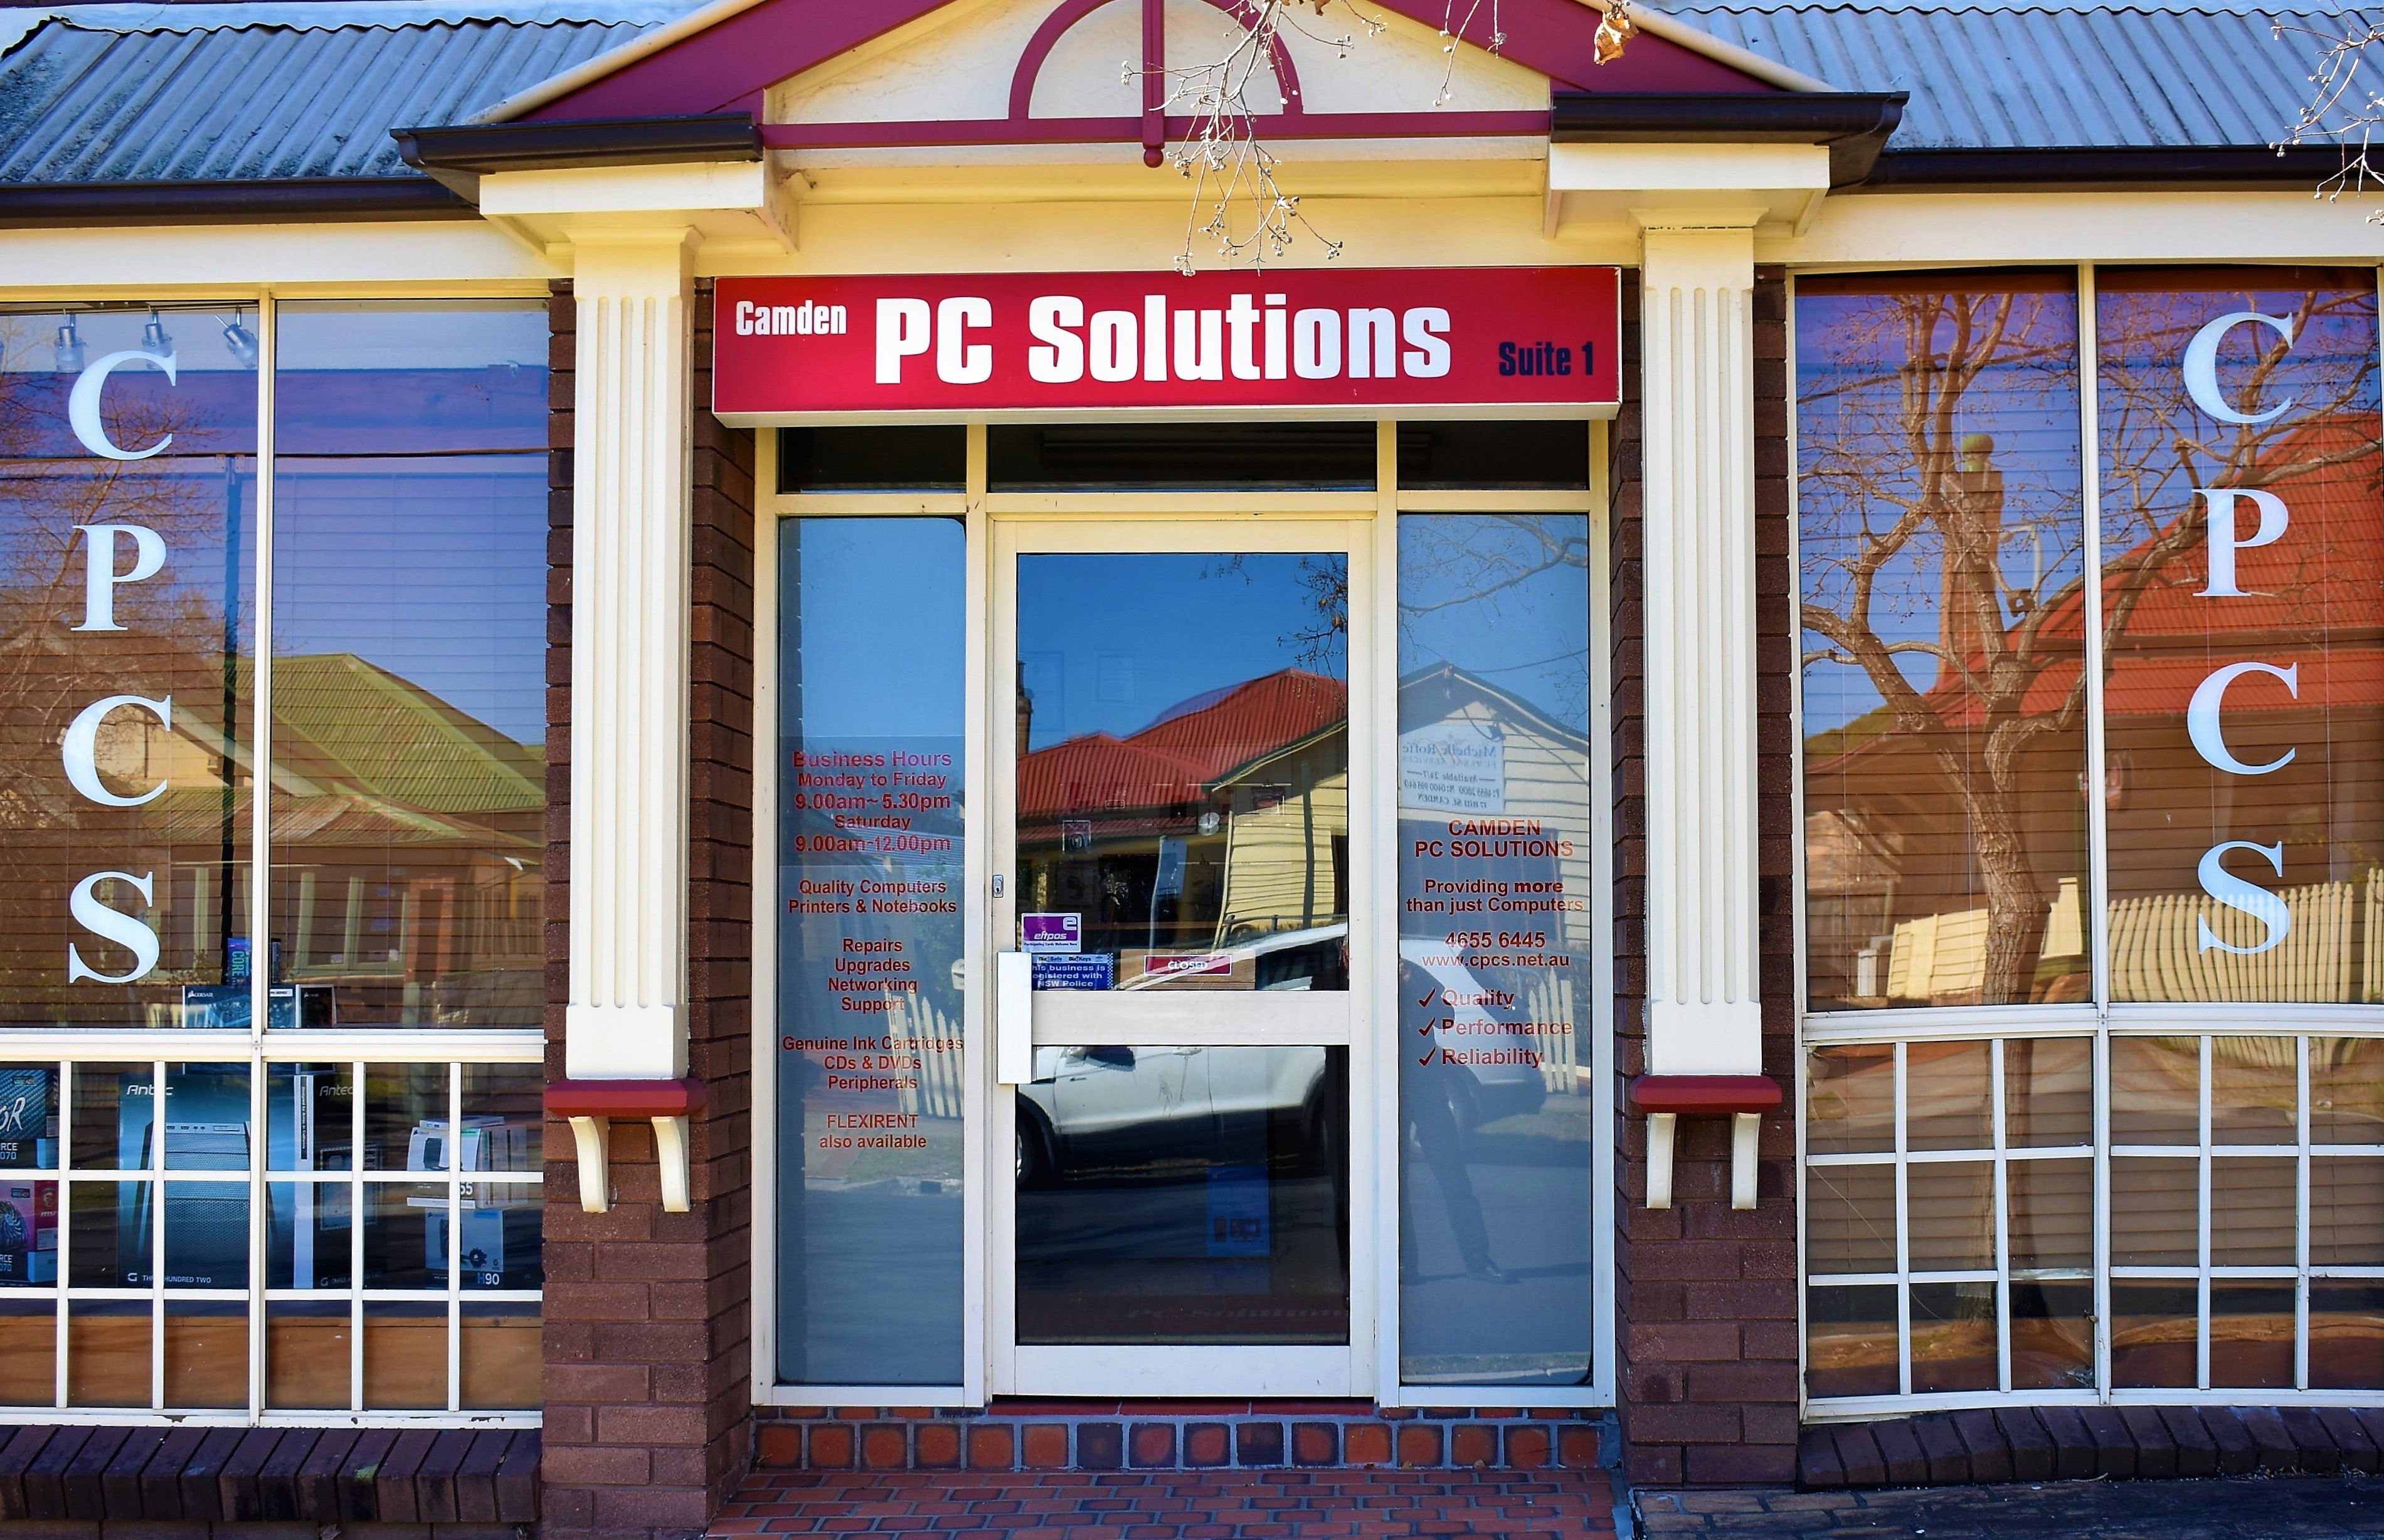 Camden-PC Solutions